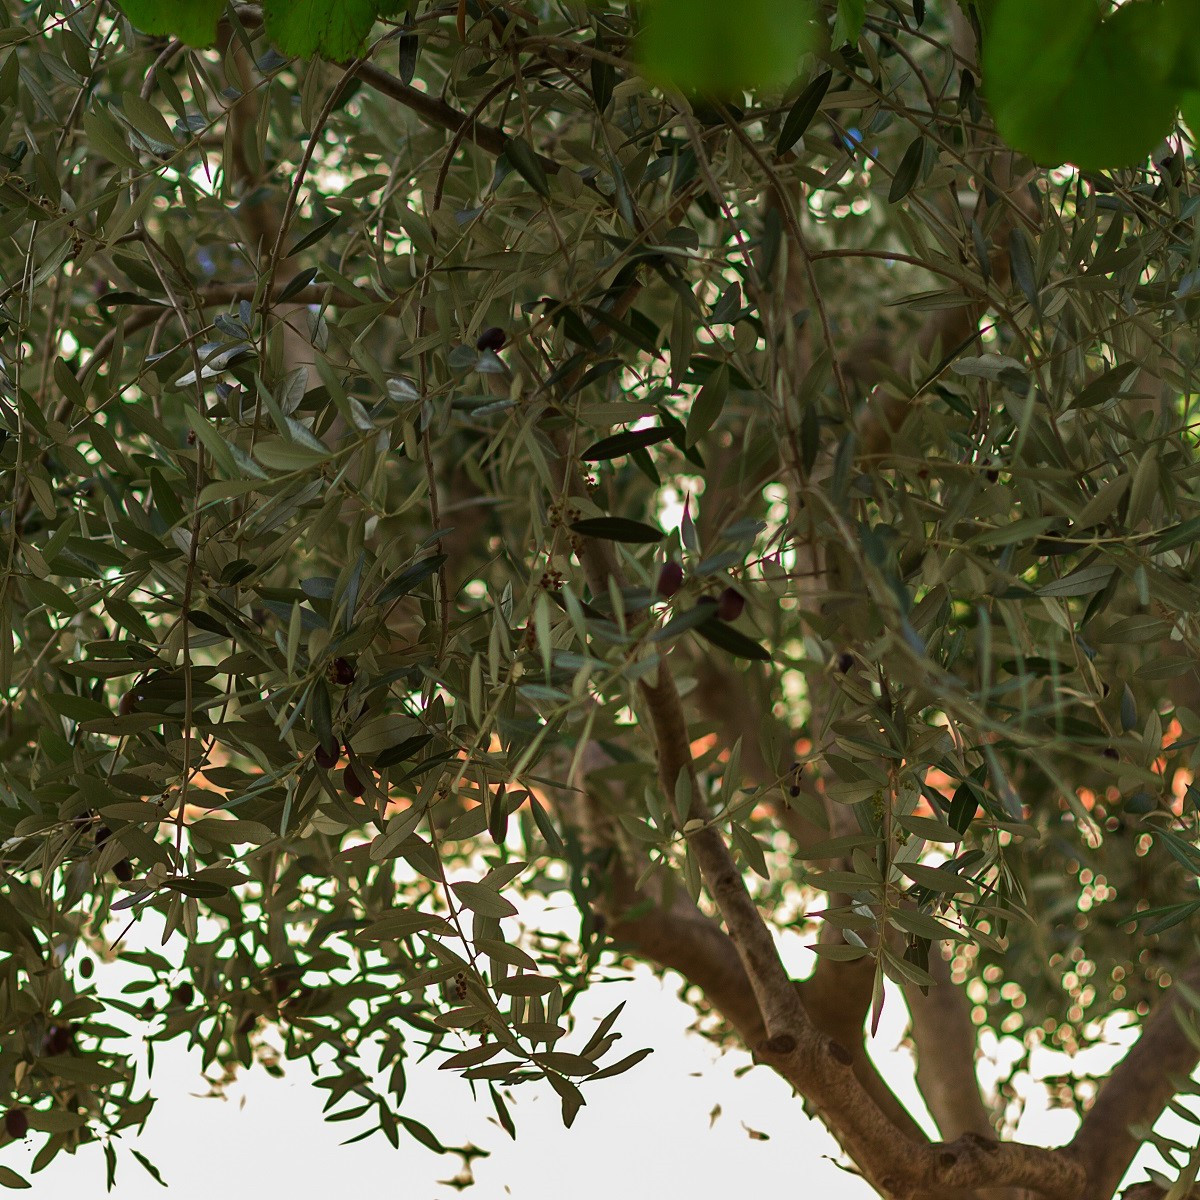 Olivovník evropský - Olea europeae - osivo olivovníku - 5 ks